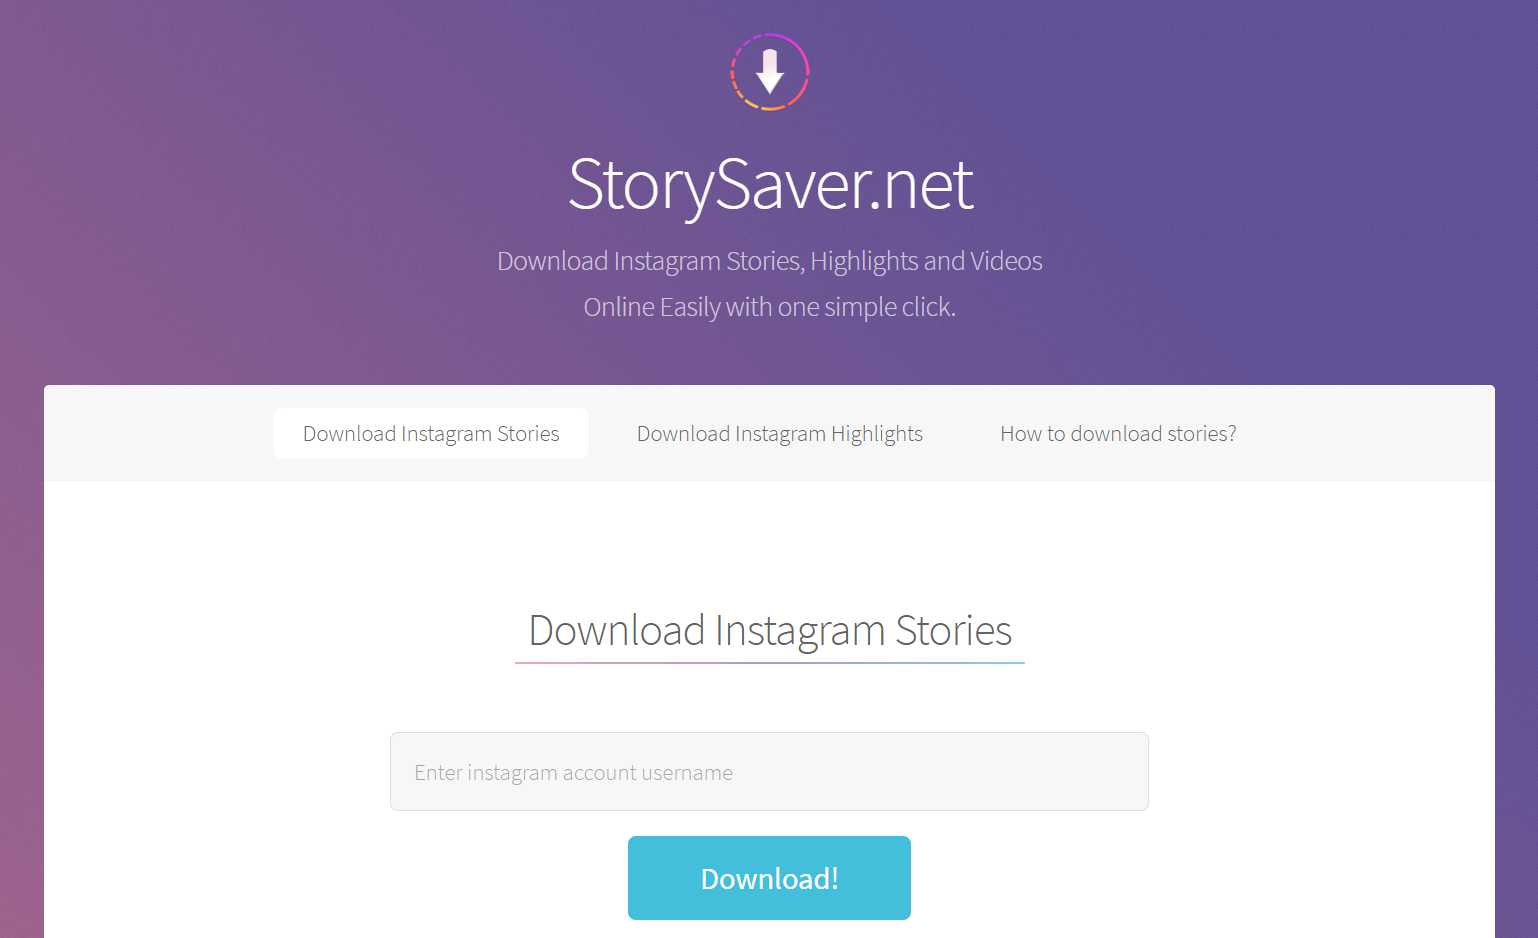 Story saver.net (http://saver.net/)